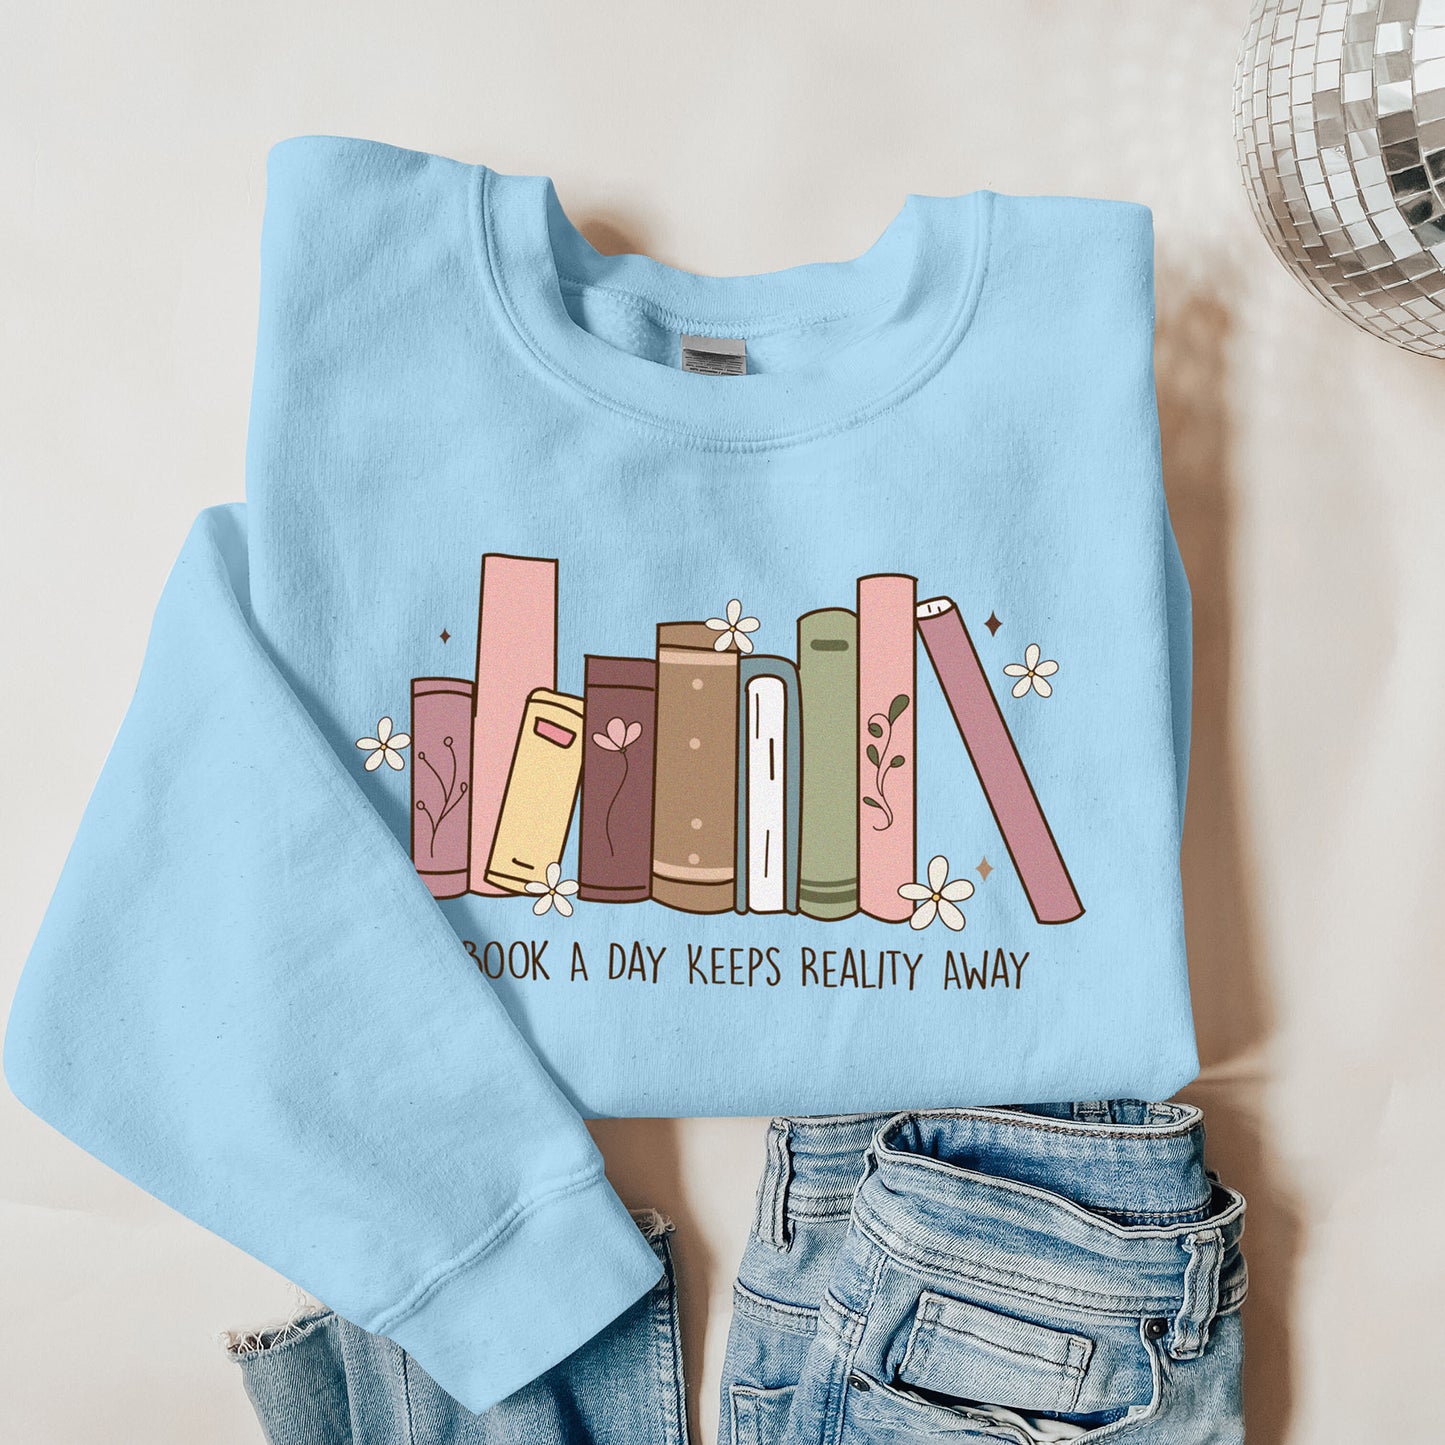 Booktok Sweatshirt - A Book a day